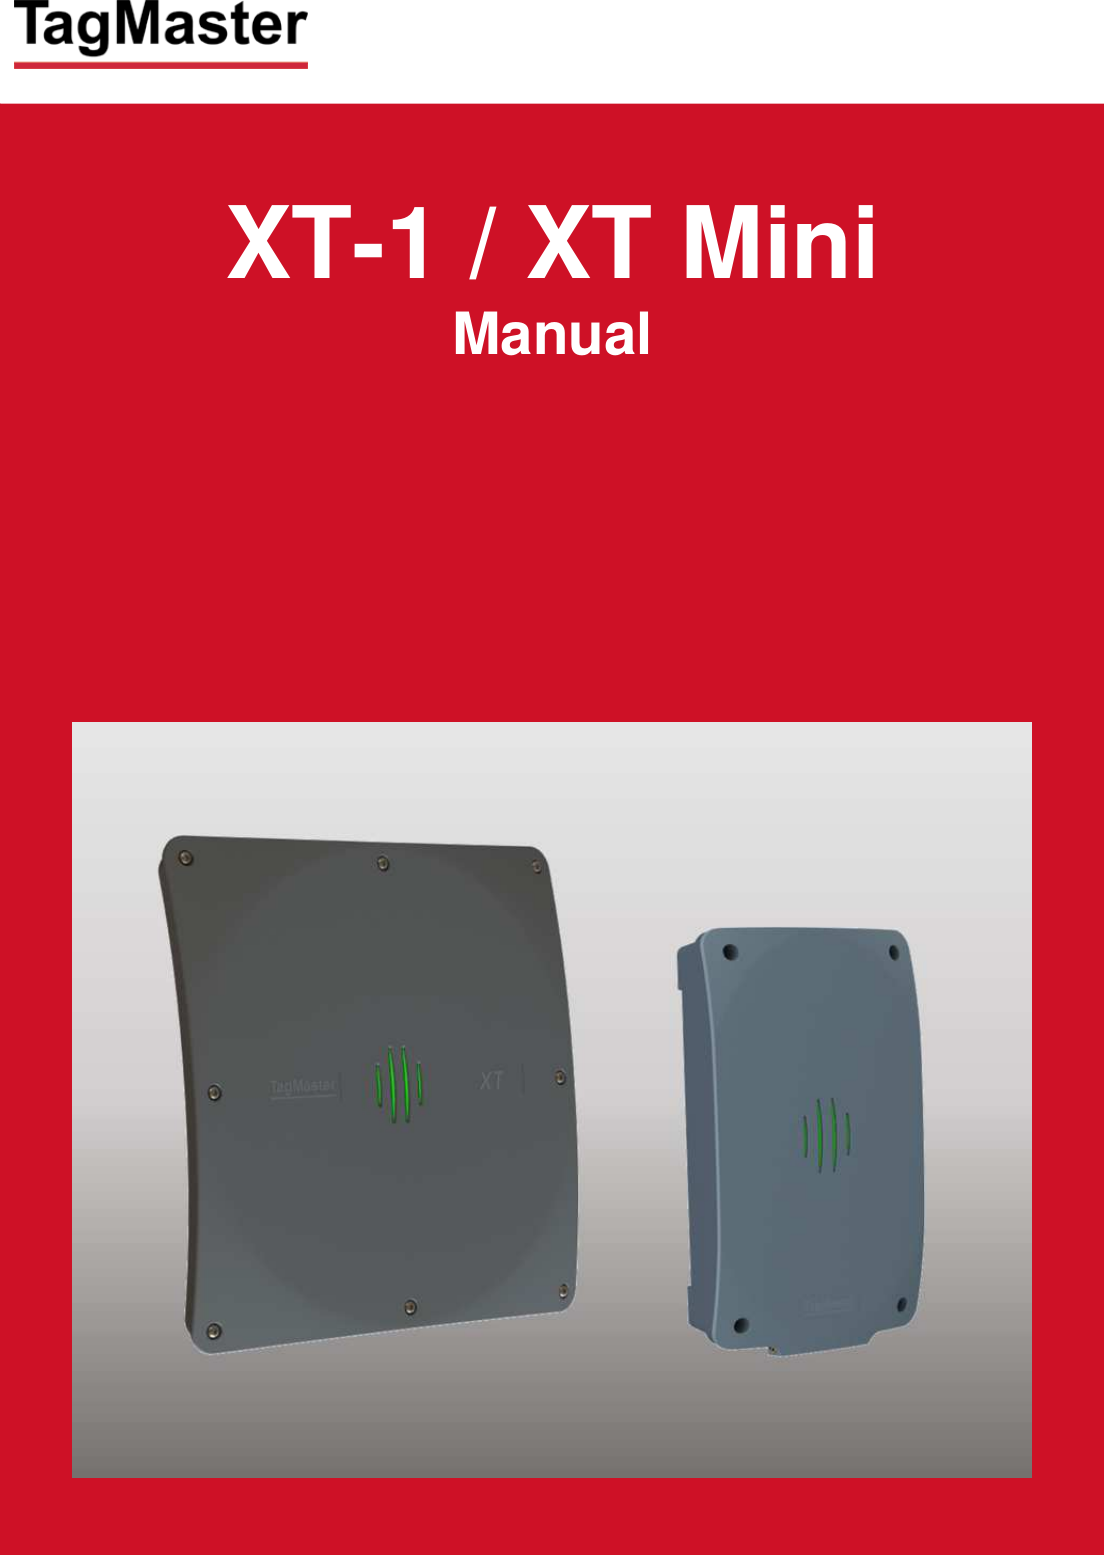         XT-1 / XT Mini Manual      